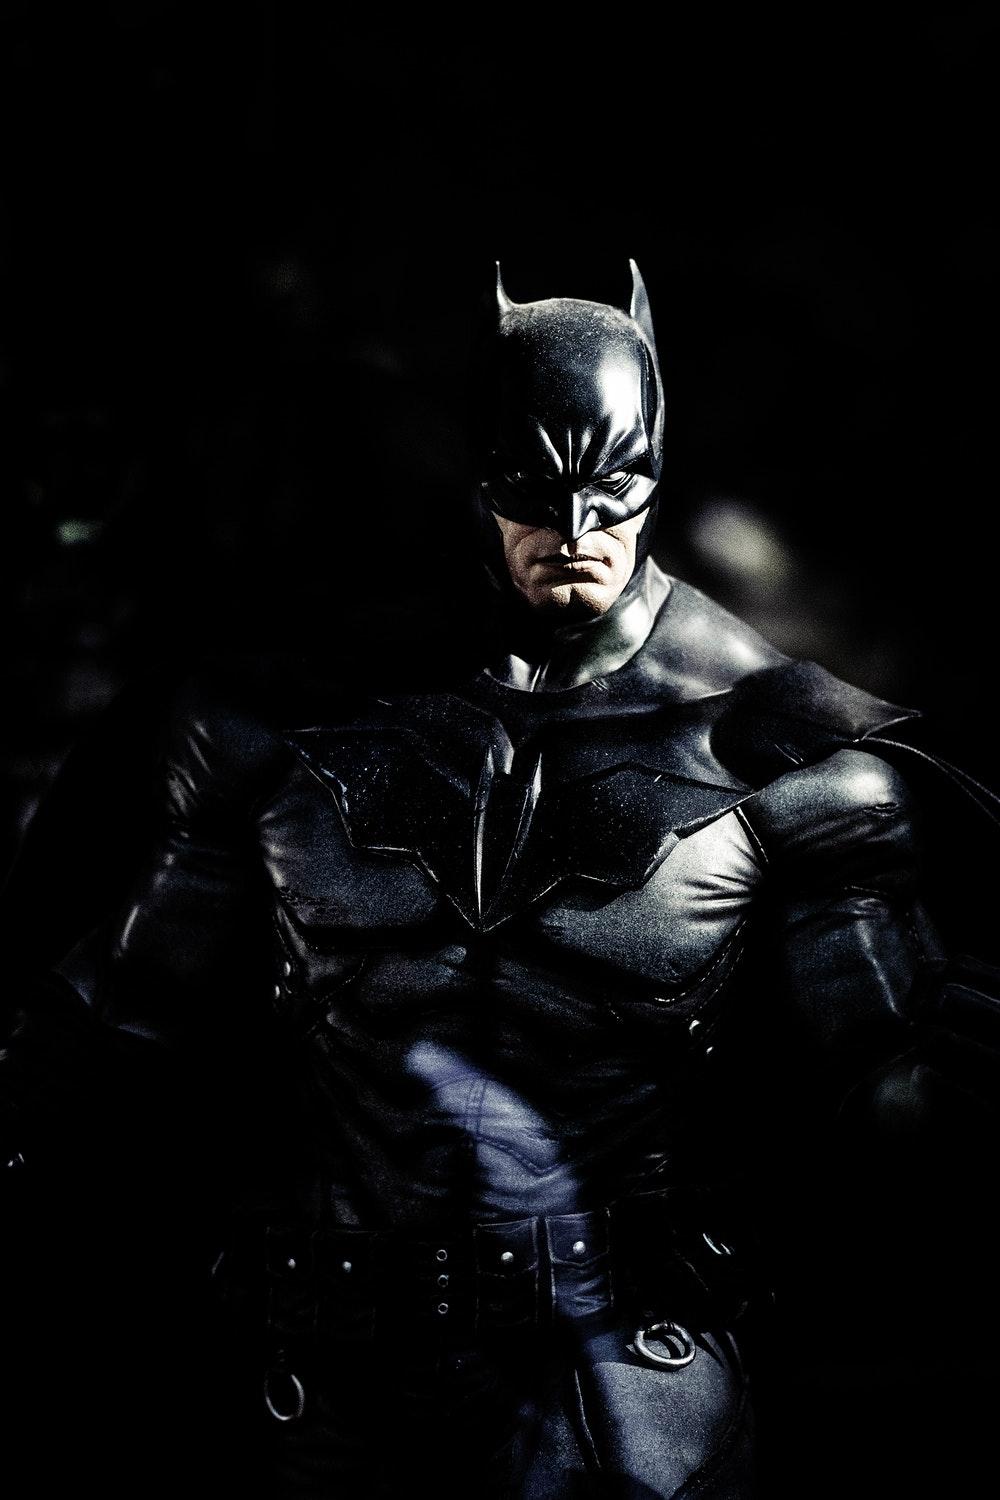 Batman Picture [HQ]. Download Free Image